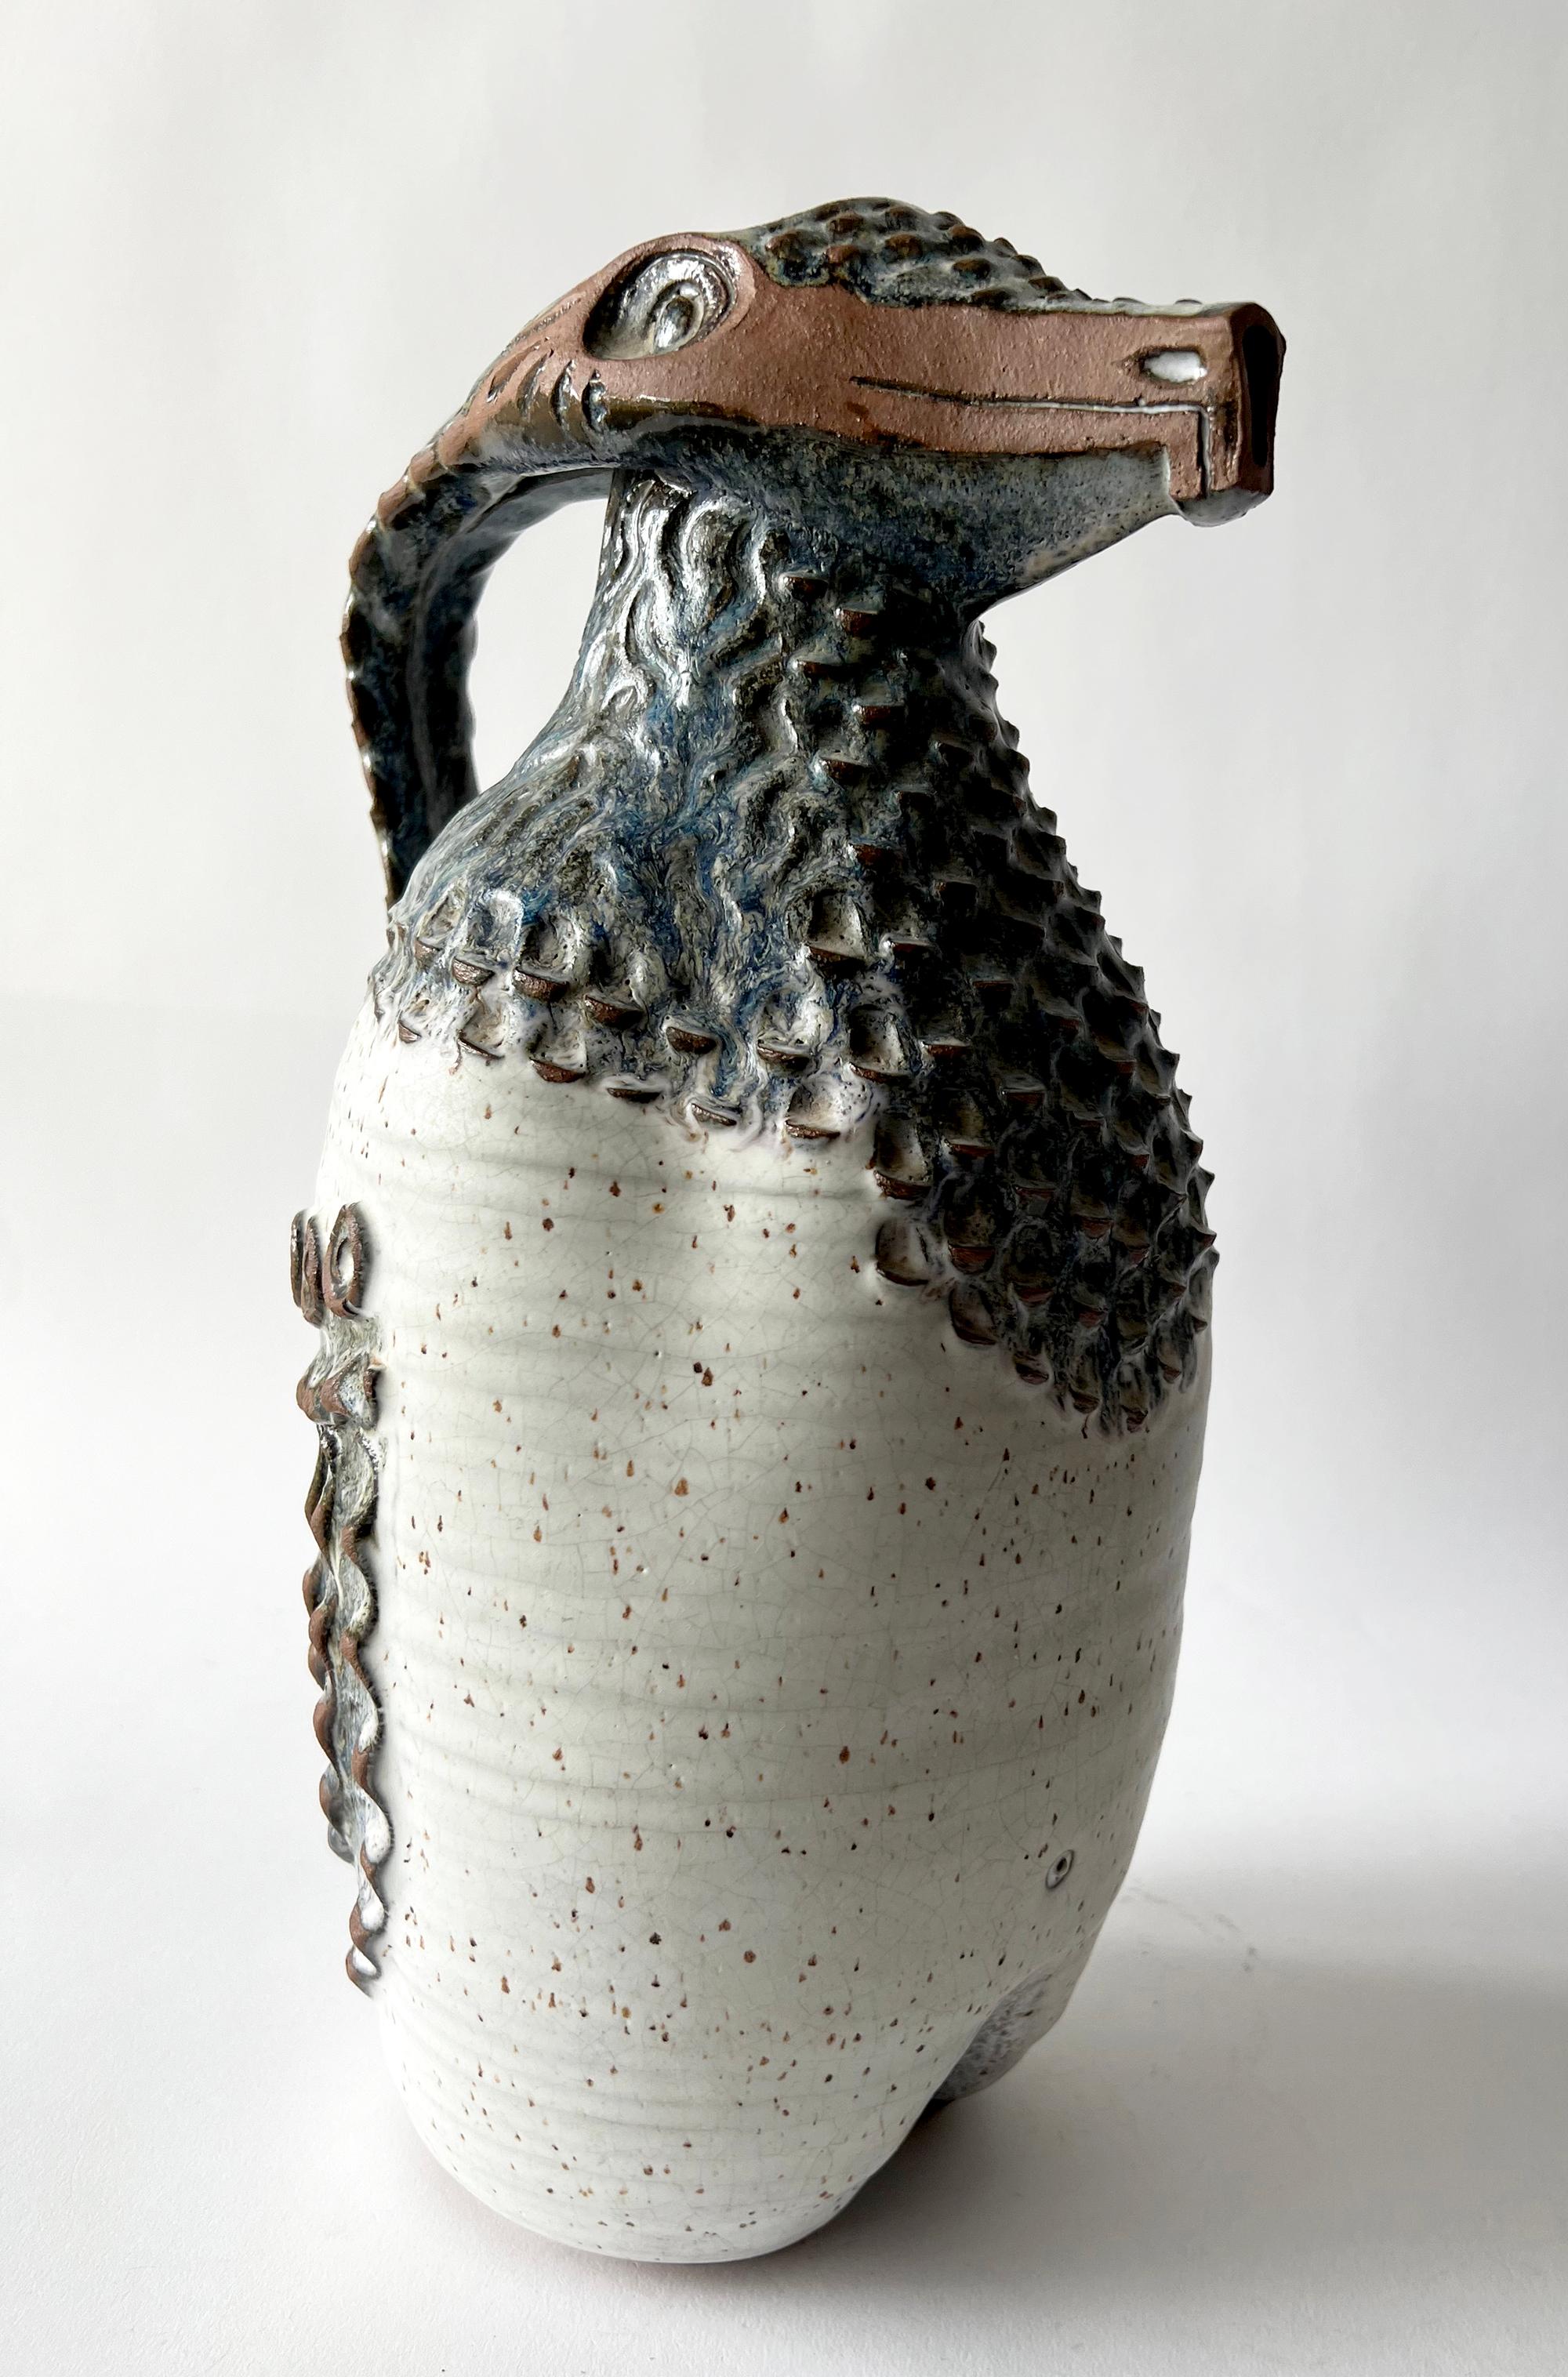 Stoneware ceramic reptilian pitcher created by Jack Mason of Stone Mountain, Georgia. Pitcher measures 14.5